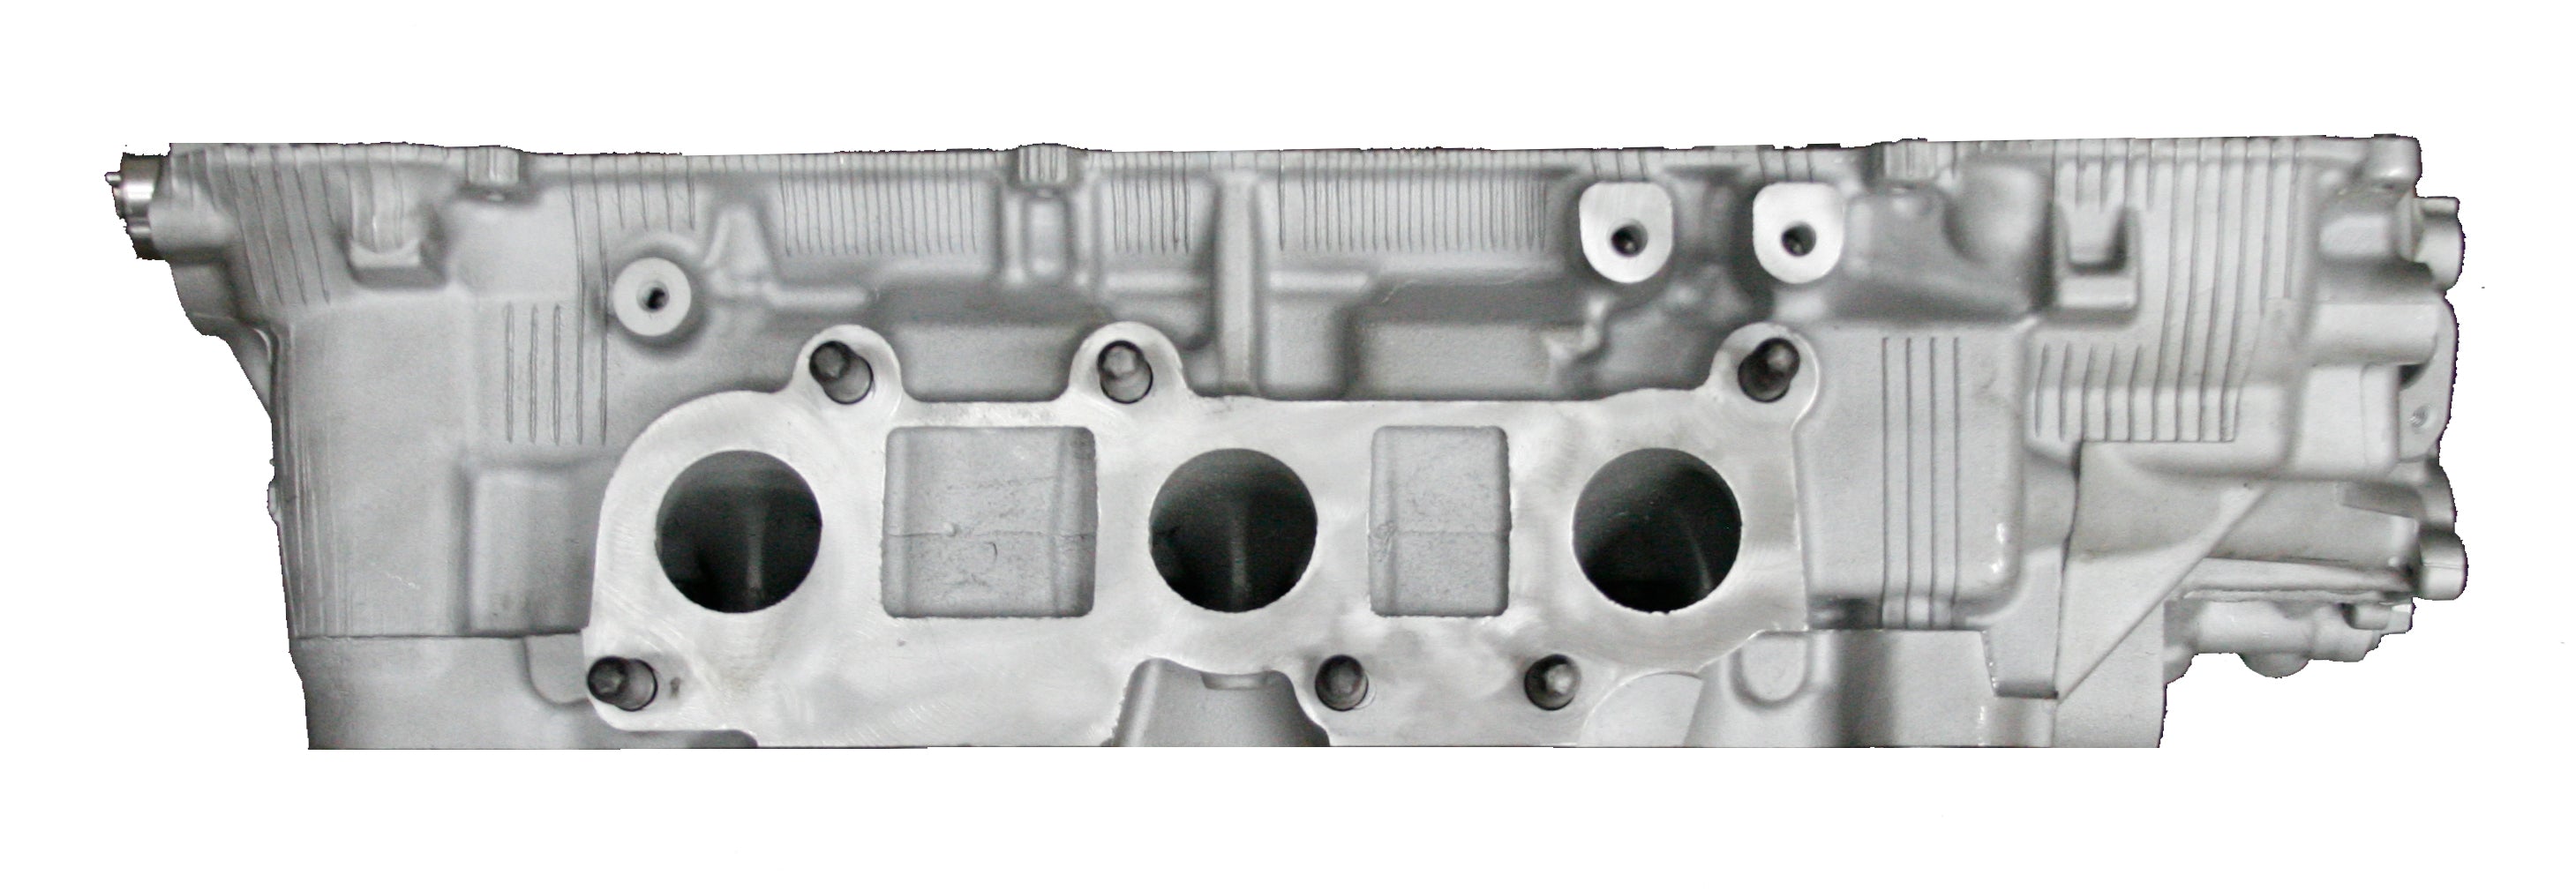 1994-2002 Toyota 3.0L DOHC VVTI Left Rebuilt Cylinder head casting # 1MZFE